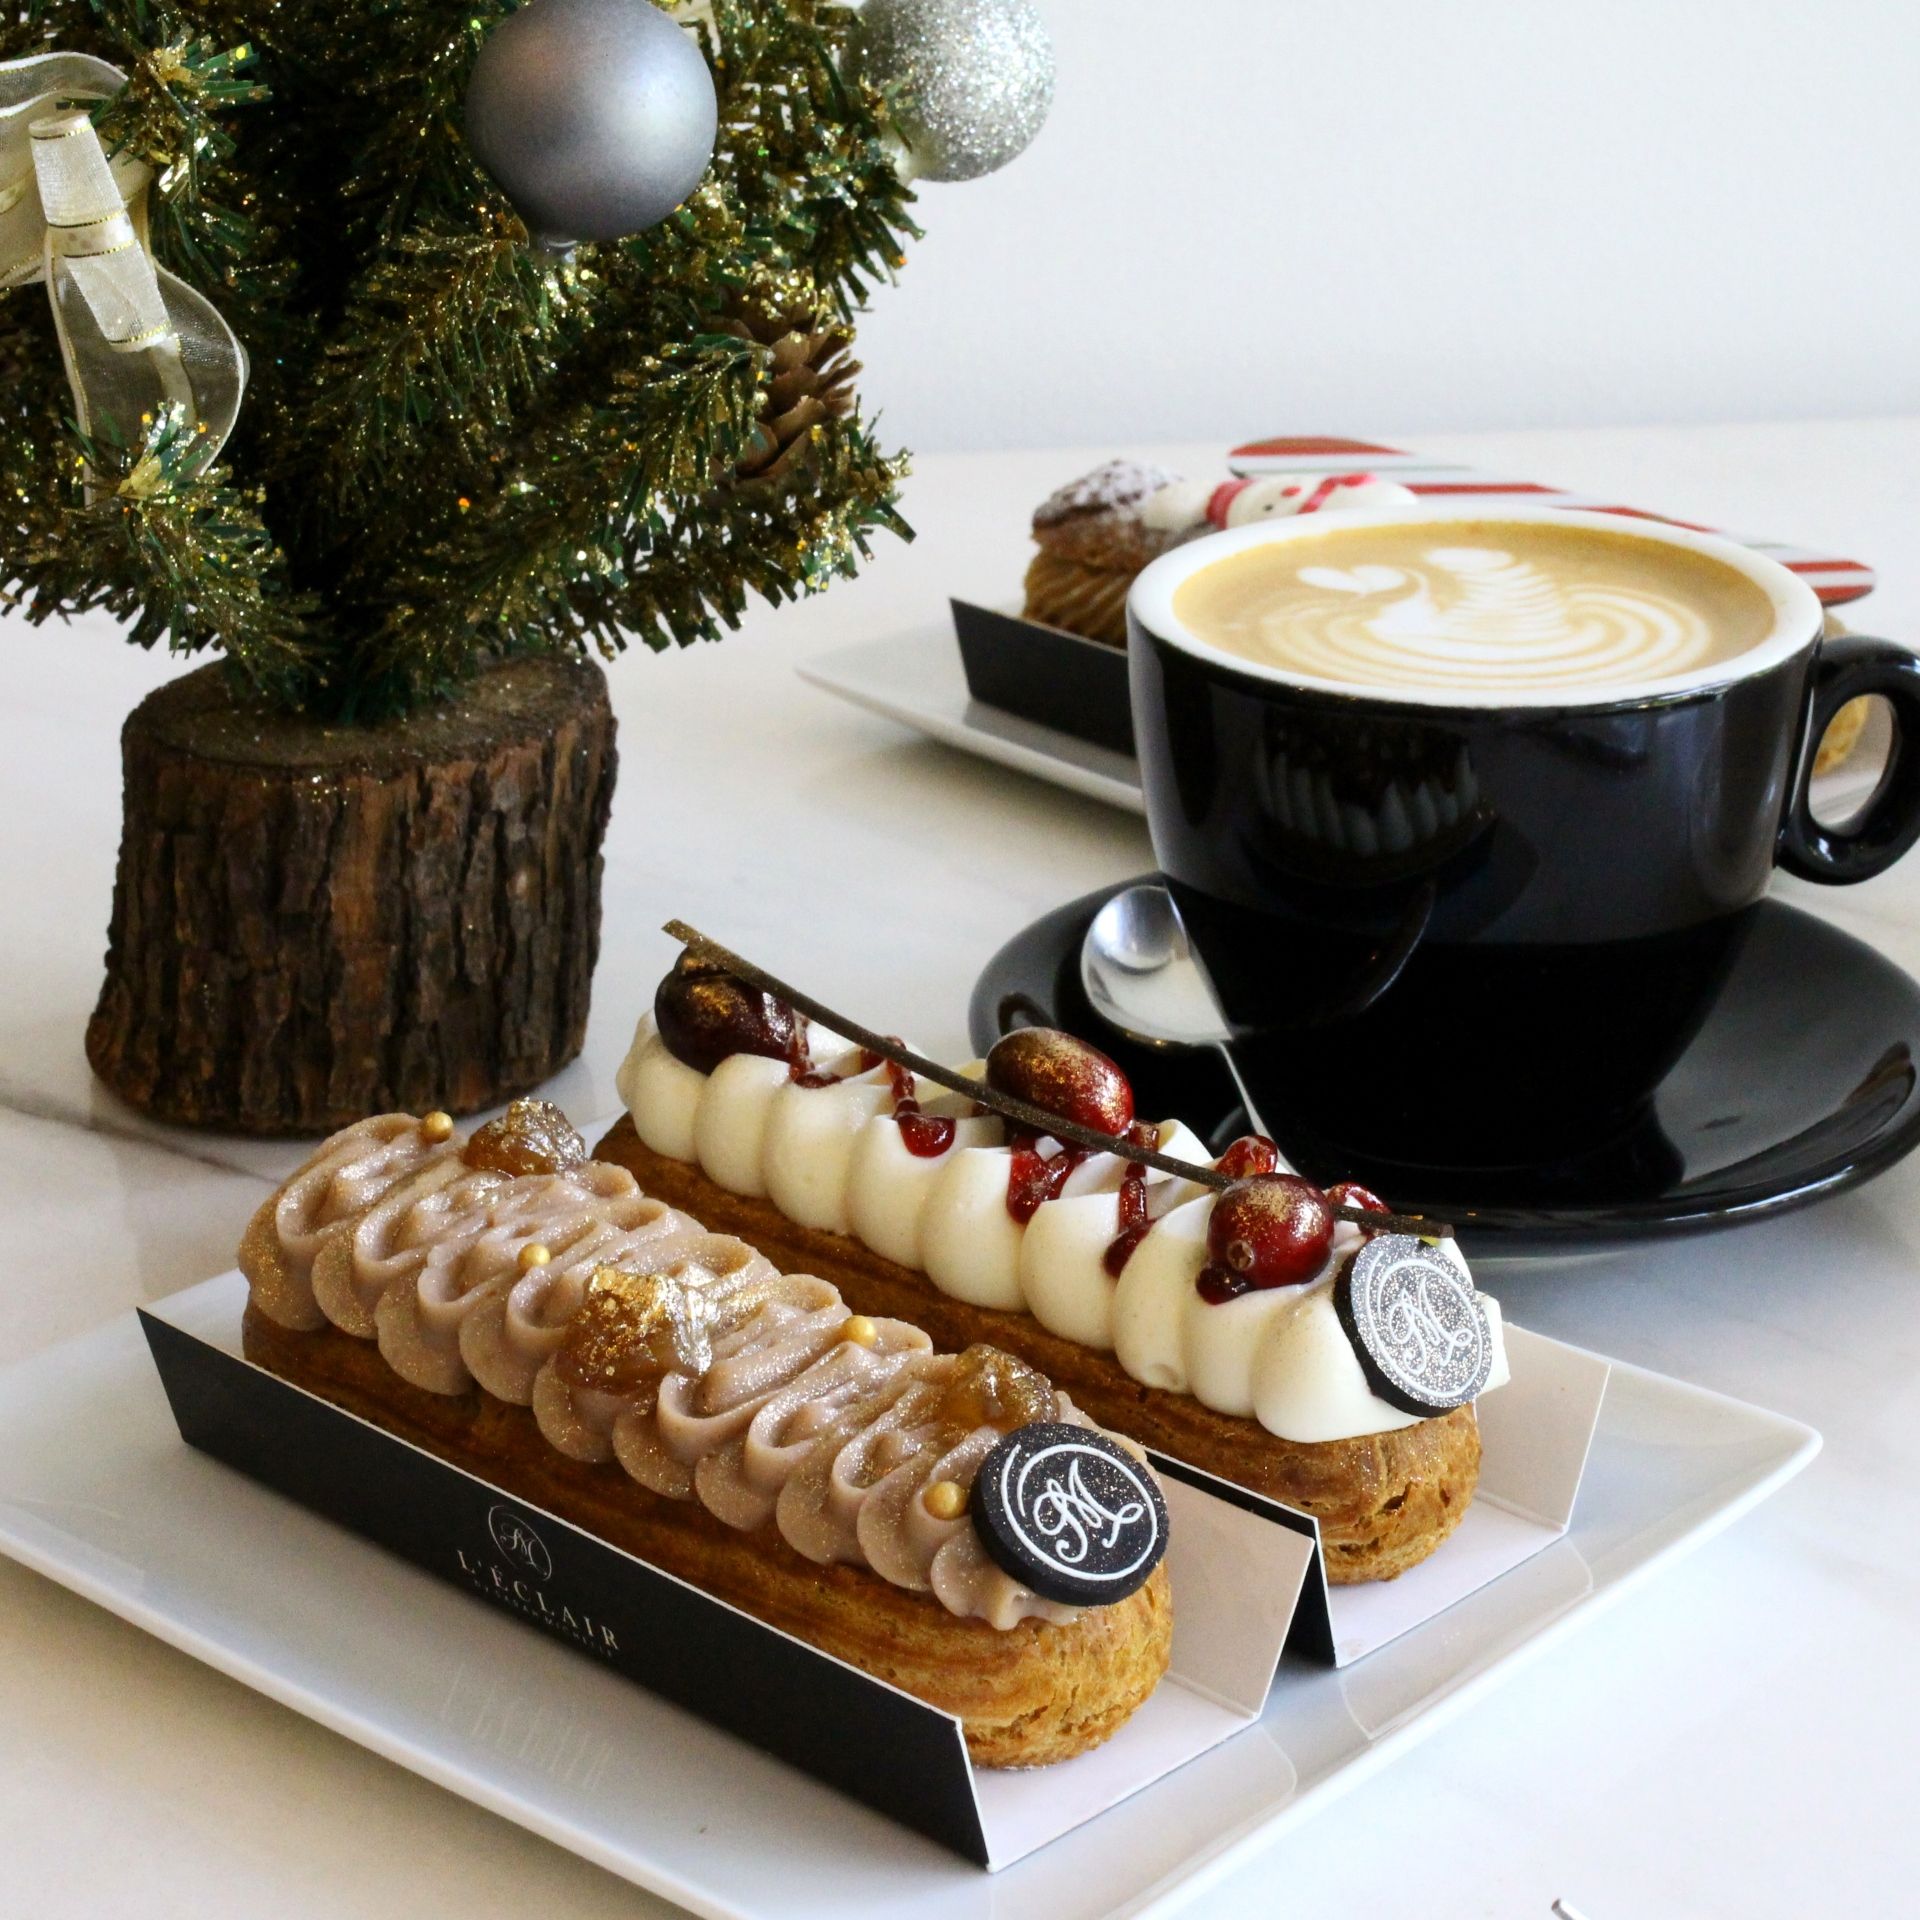 L’éclair launches seasonal pastries for Christmas